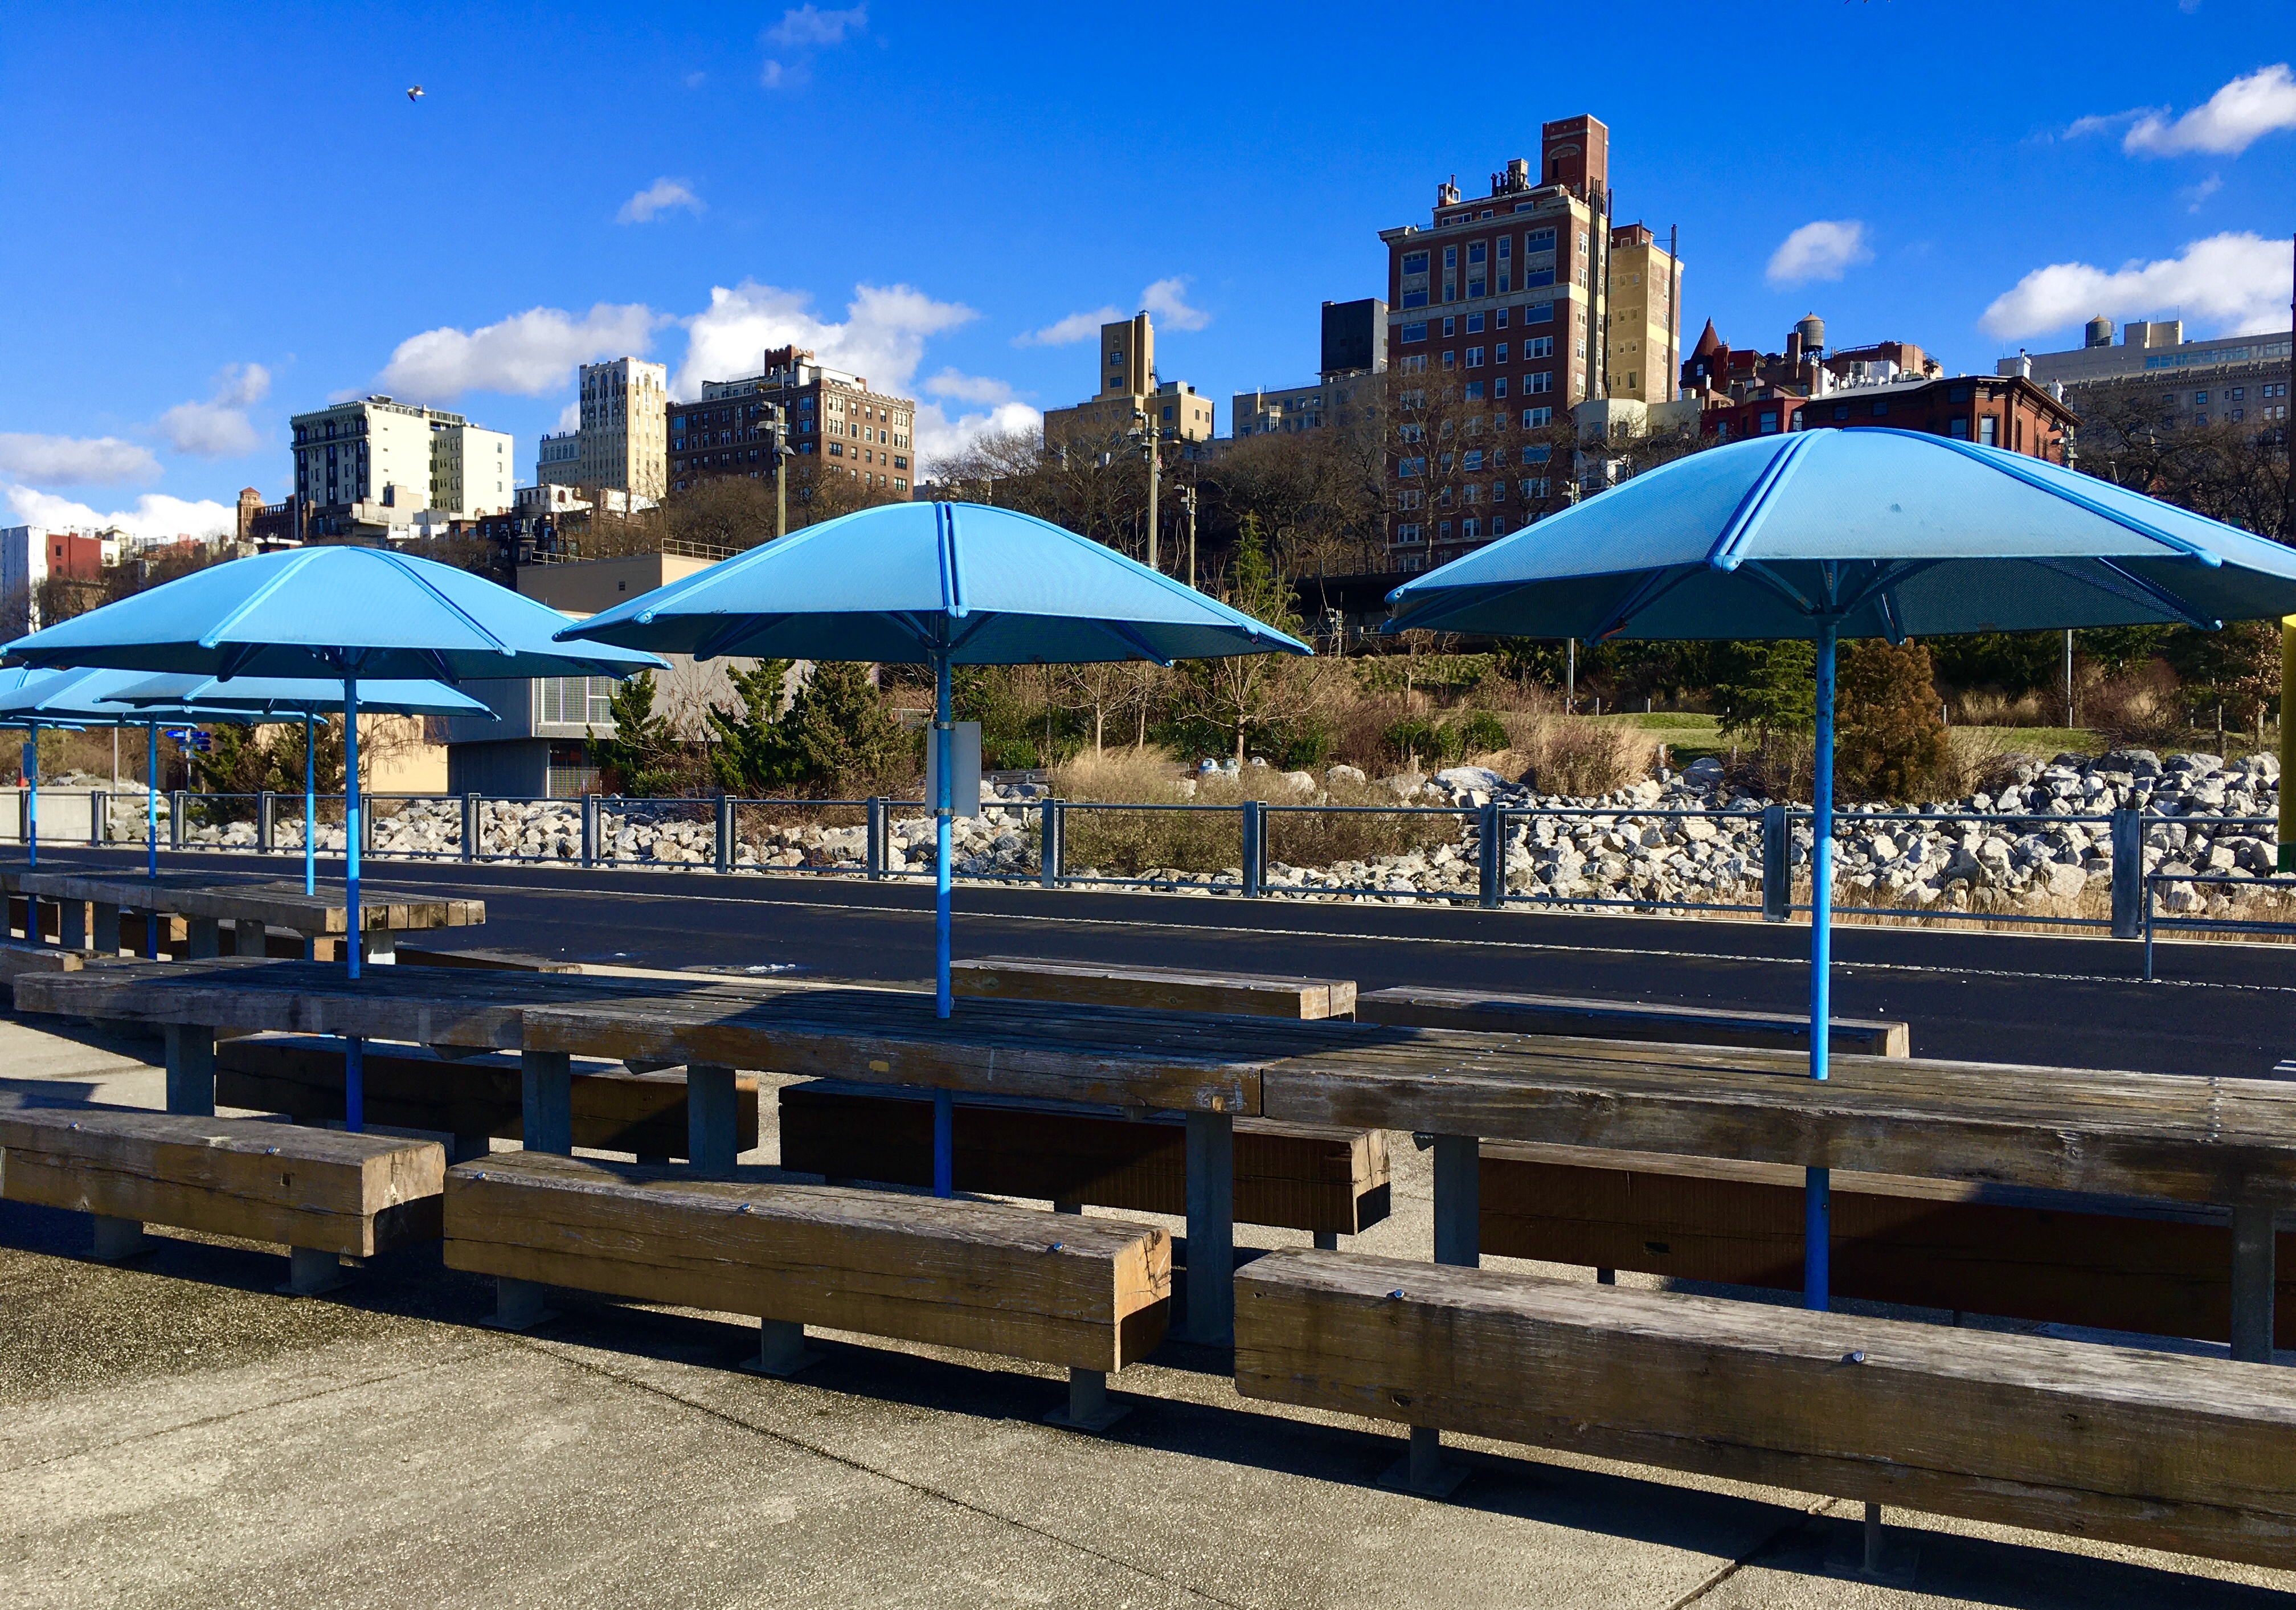 Blue umbrellas brighten up the Picnic Peninsula on Pier 5 at Brooklyn Bridge Park. Photo: Lore Croghan/Brooklyn Eagle